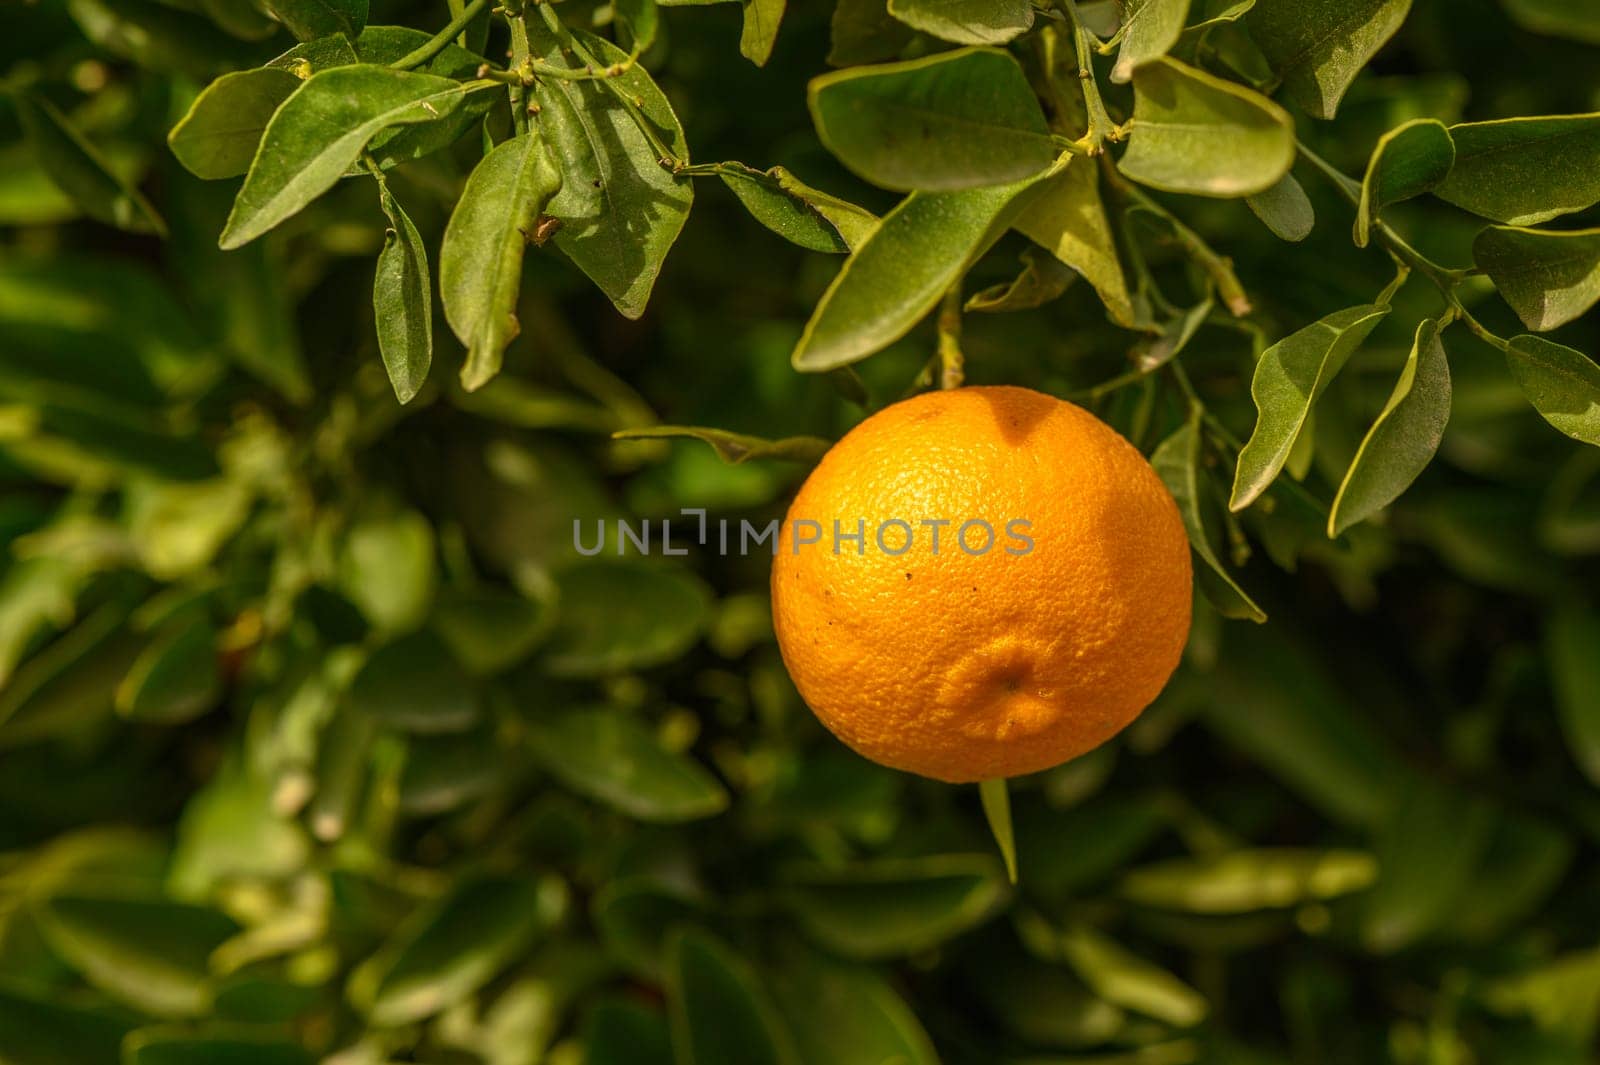 juicy fresh tangerines in a garden in Cyprus in winter 2